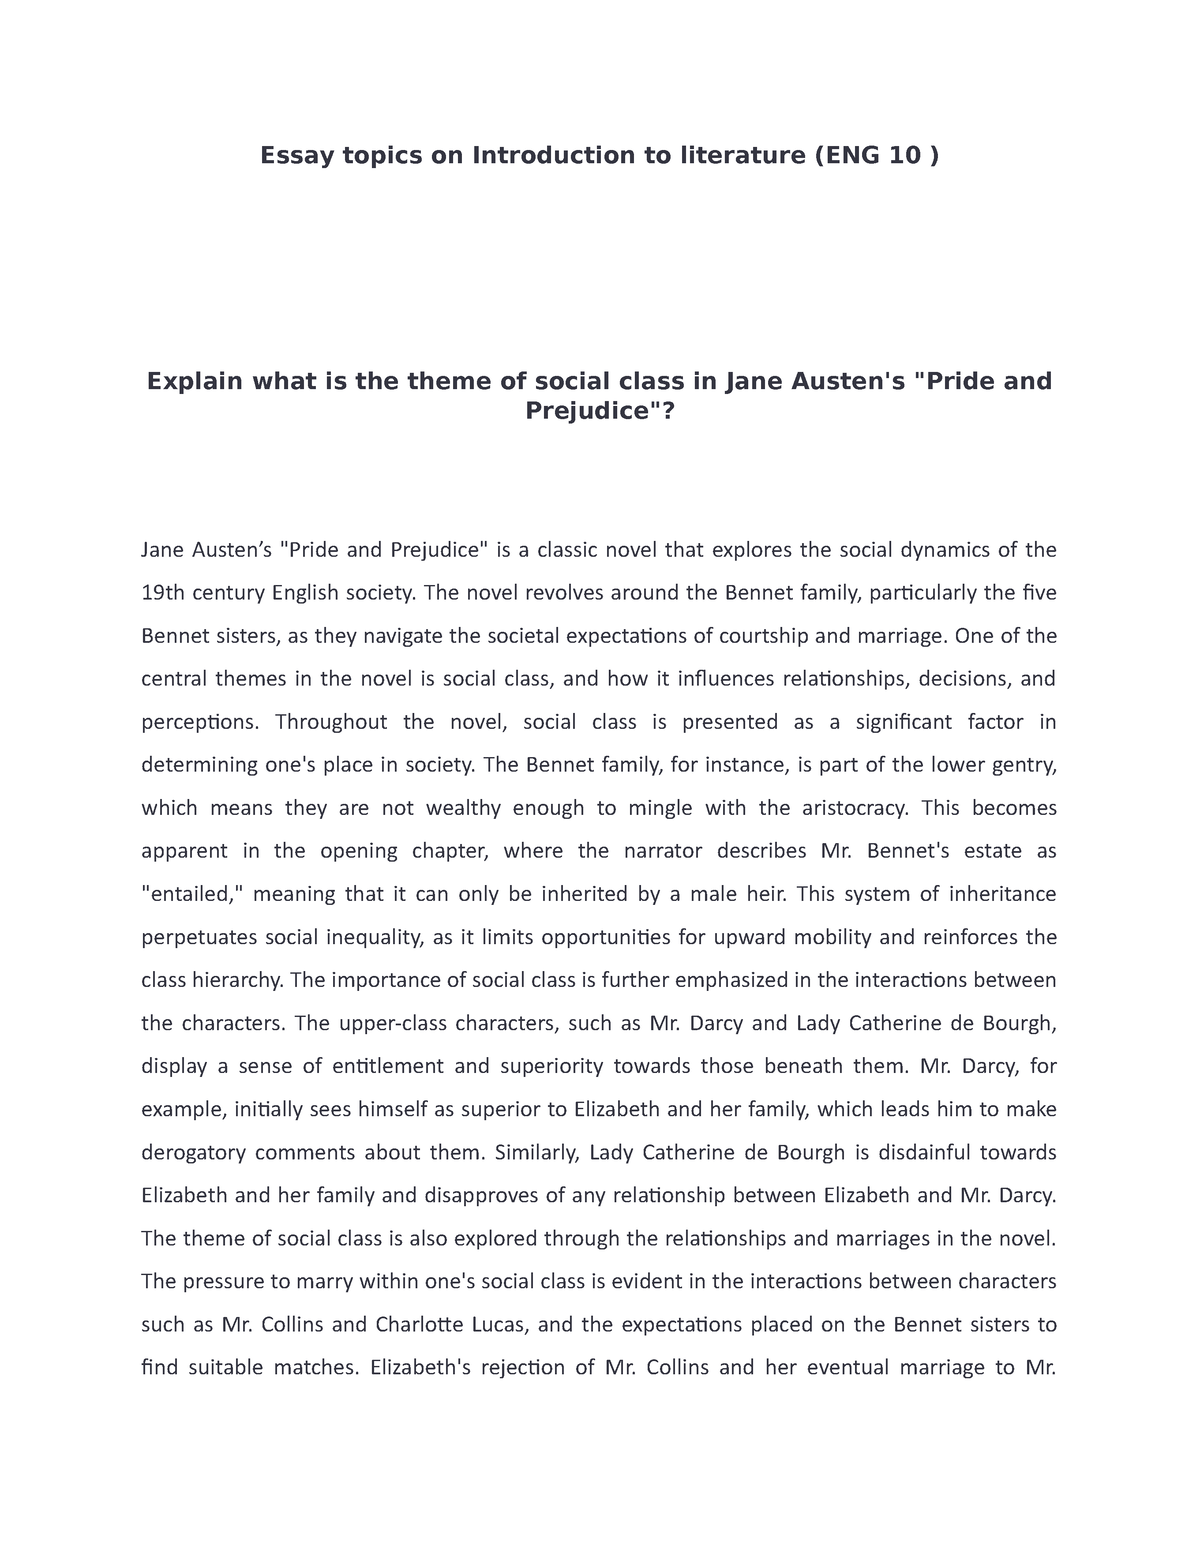 research paper on pride and prejudice pdf